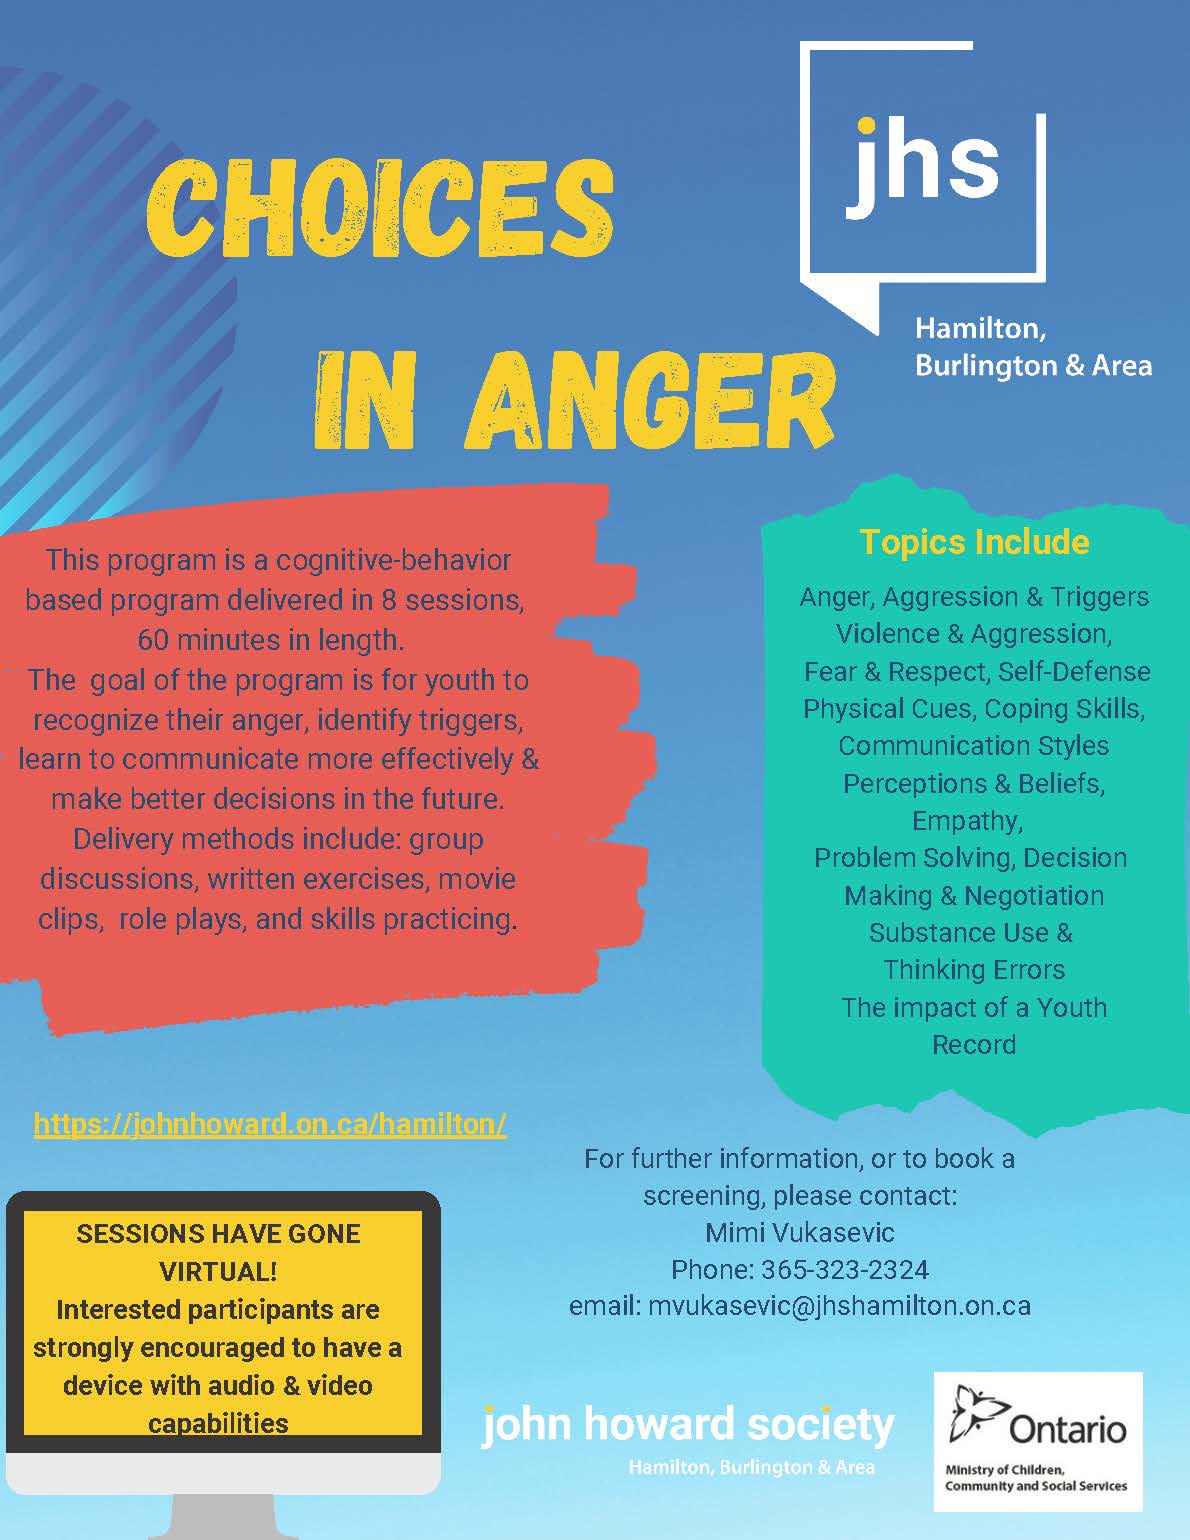 JHS hamilton and burlington Choices in anger flyer